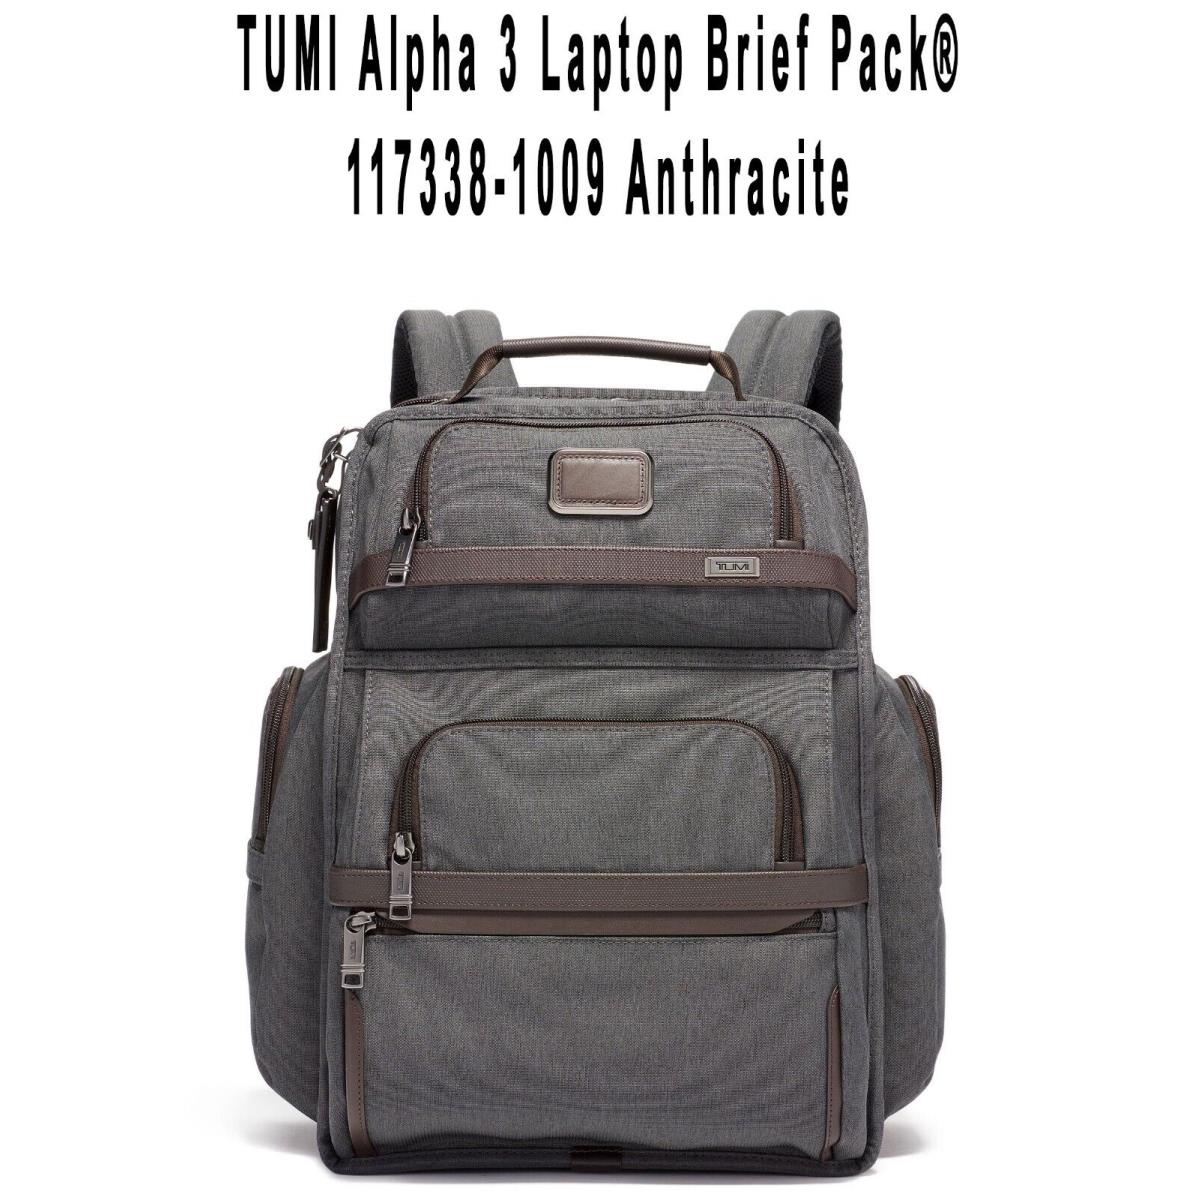 Tumi Alpha 3 Laptop Brief Pack 117338-1009 Anthracite - Gray